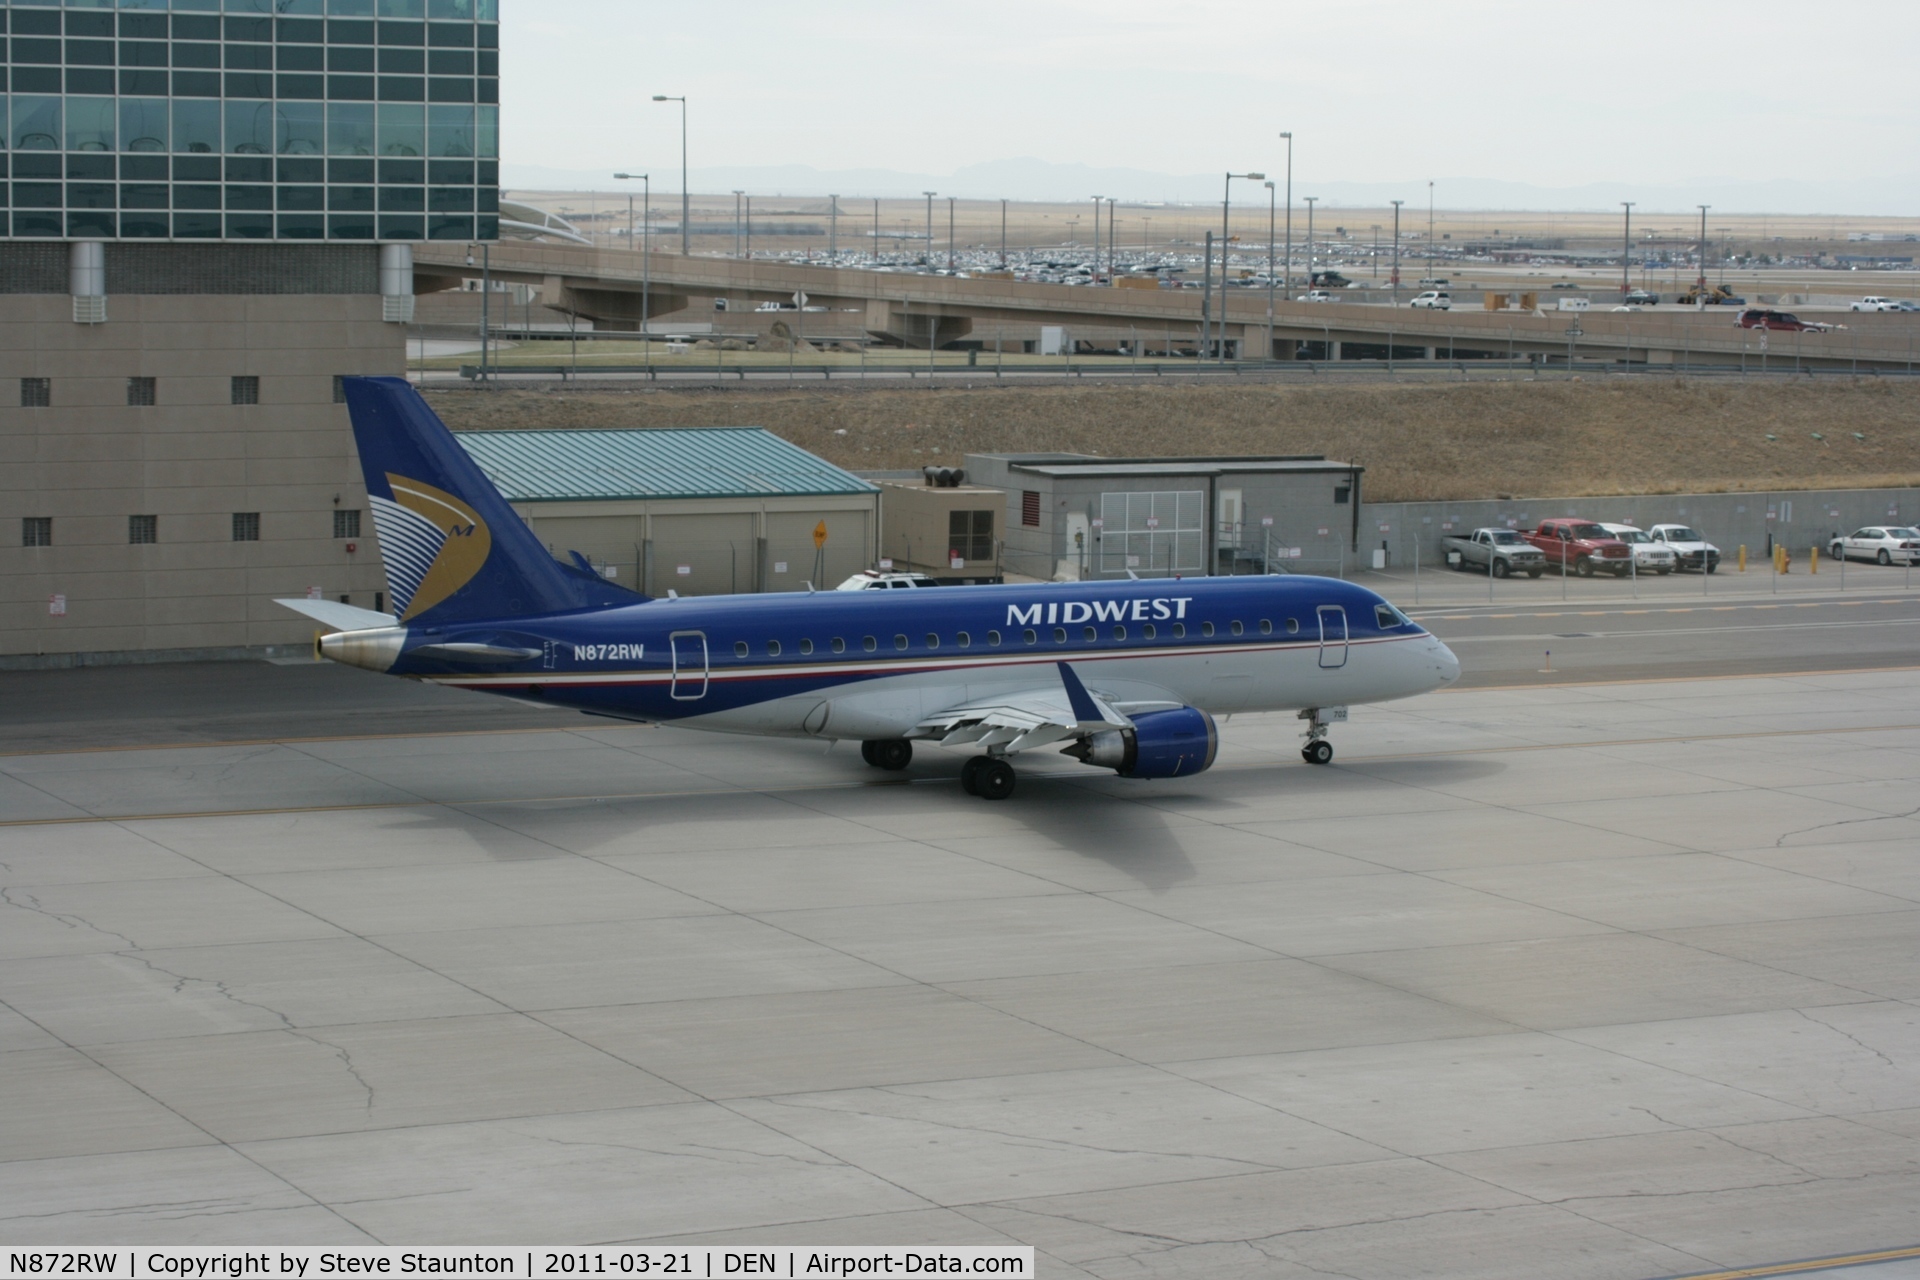 N872RW, 2006 Embraer ERJ 170-100 SE C/N 17000143, Taken at Denver International Airport, in March 2011 whilst on an Aeroprint Aviation tour